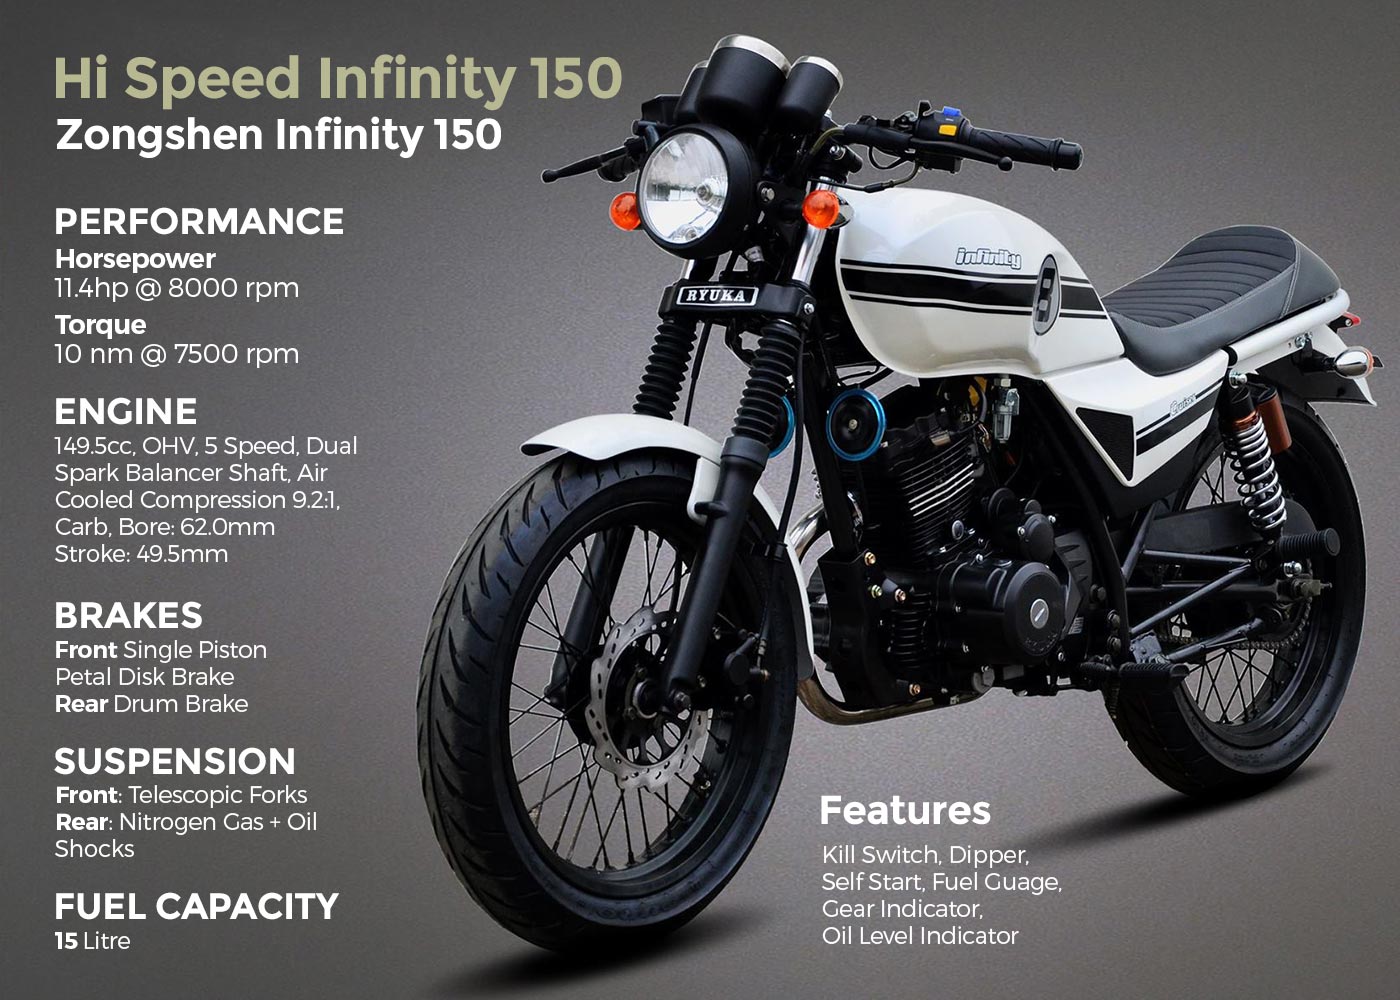 Hi Speed Infinity 150 Specifications